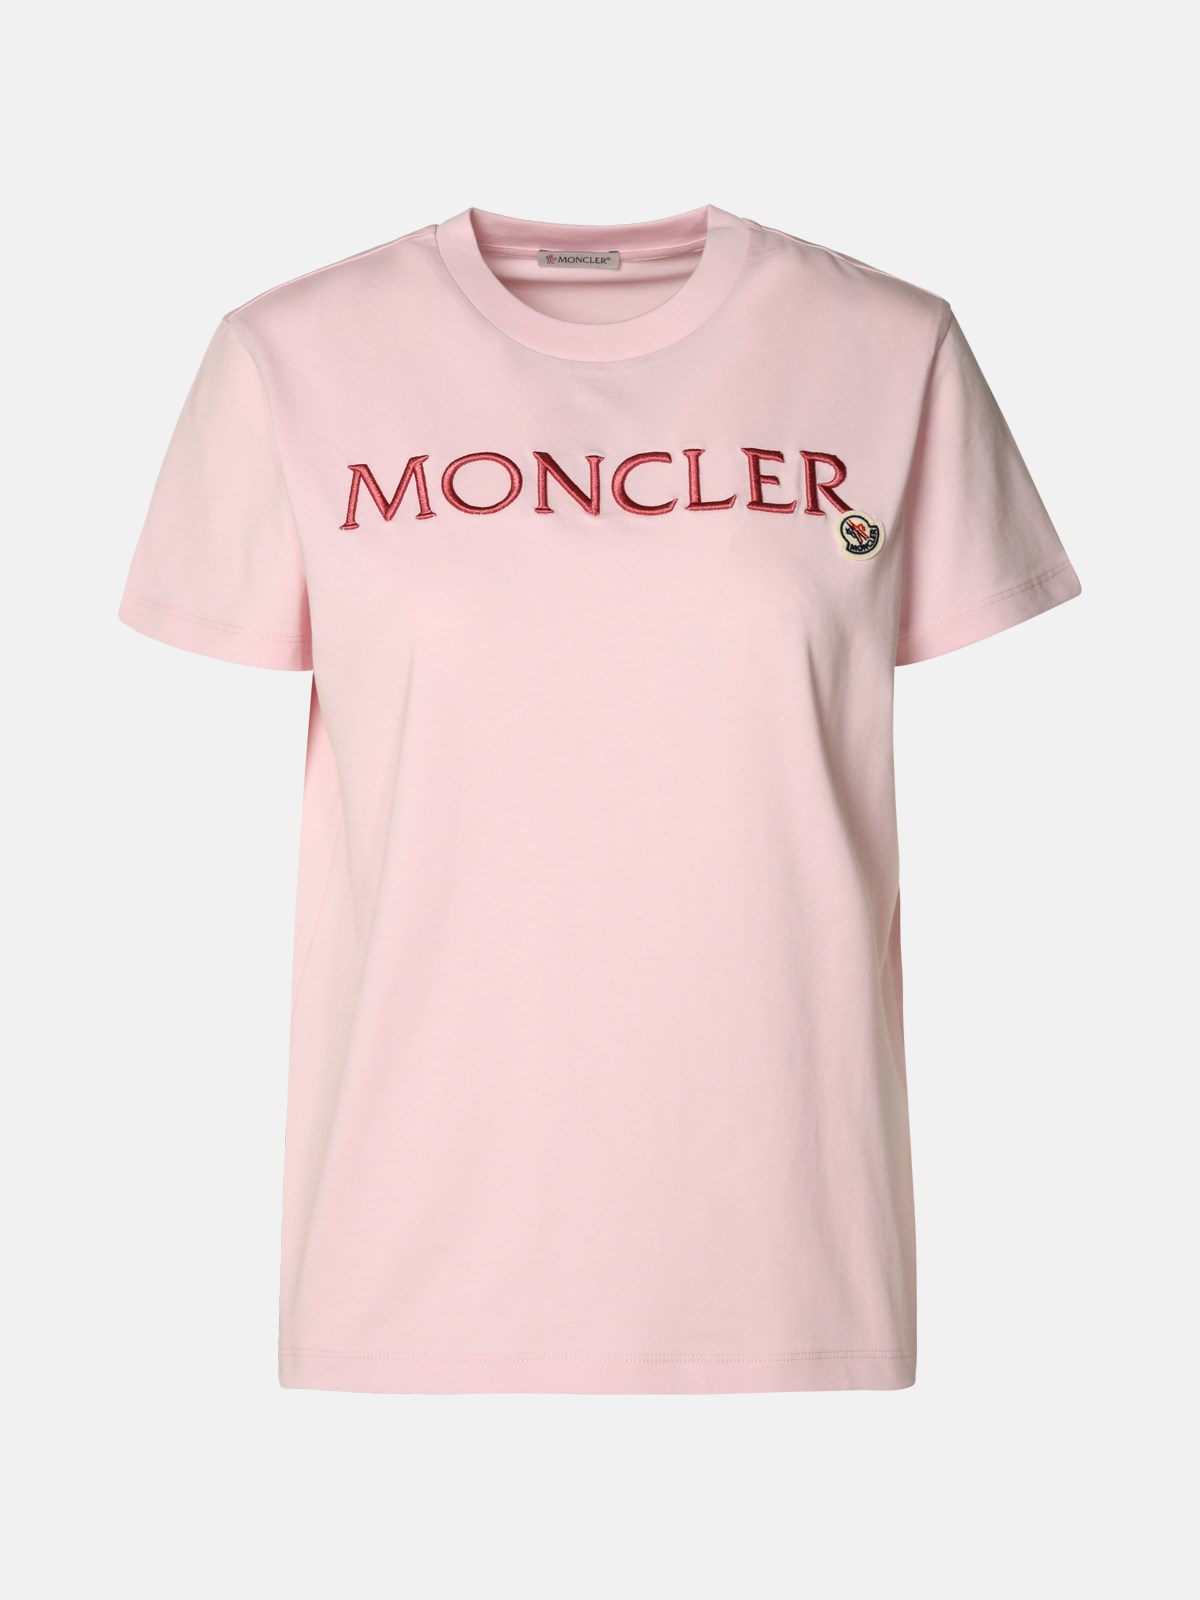 Moncler Kids' Pink Cotton T-shirt